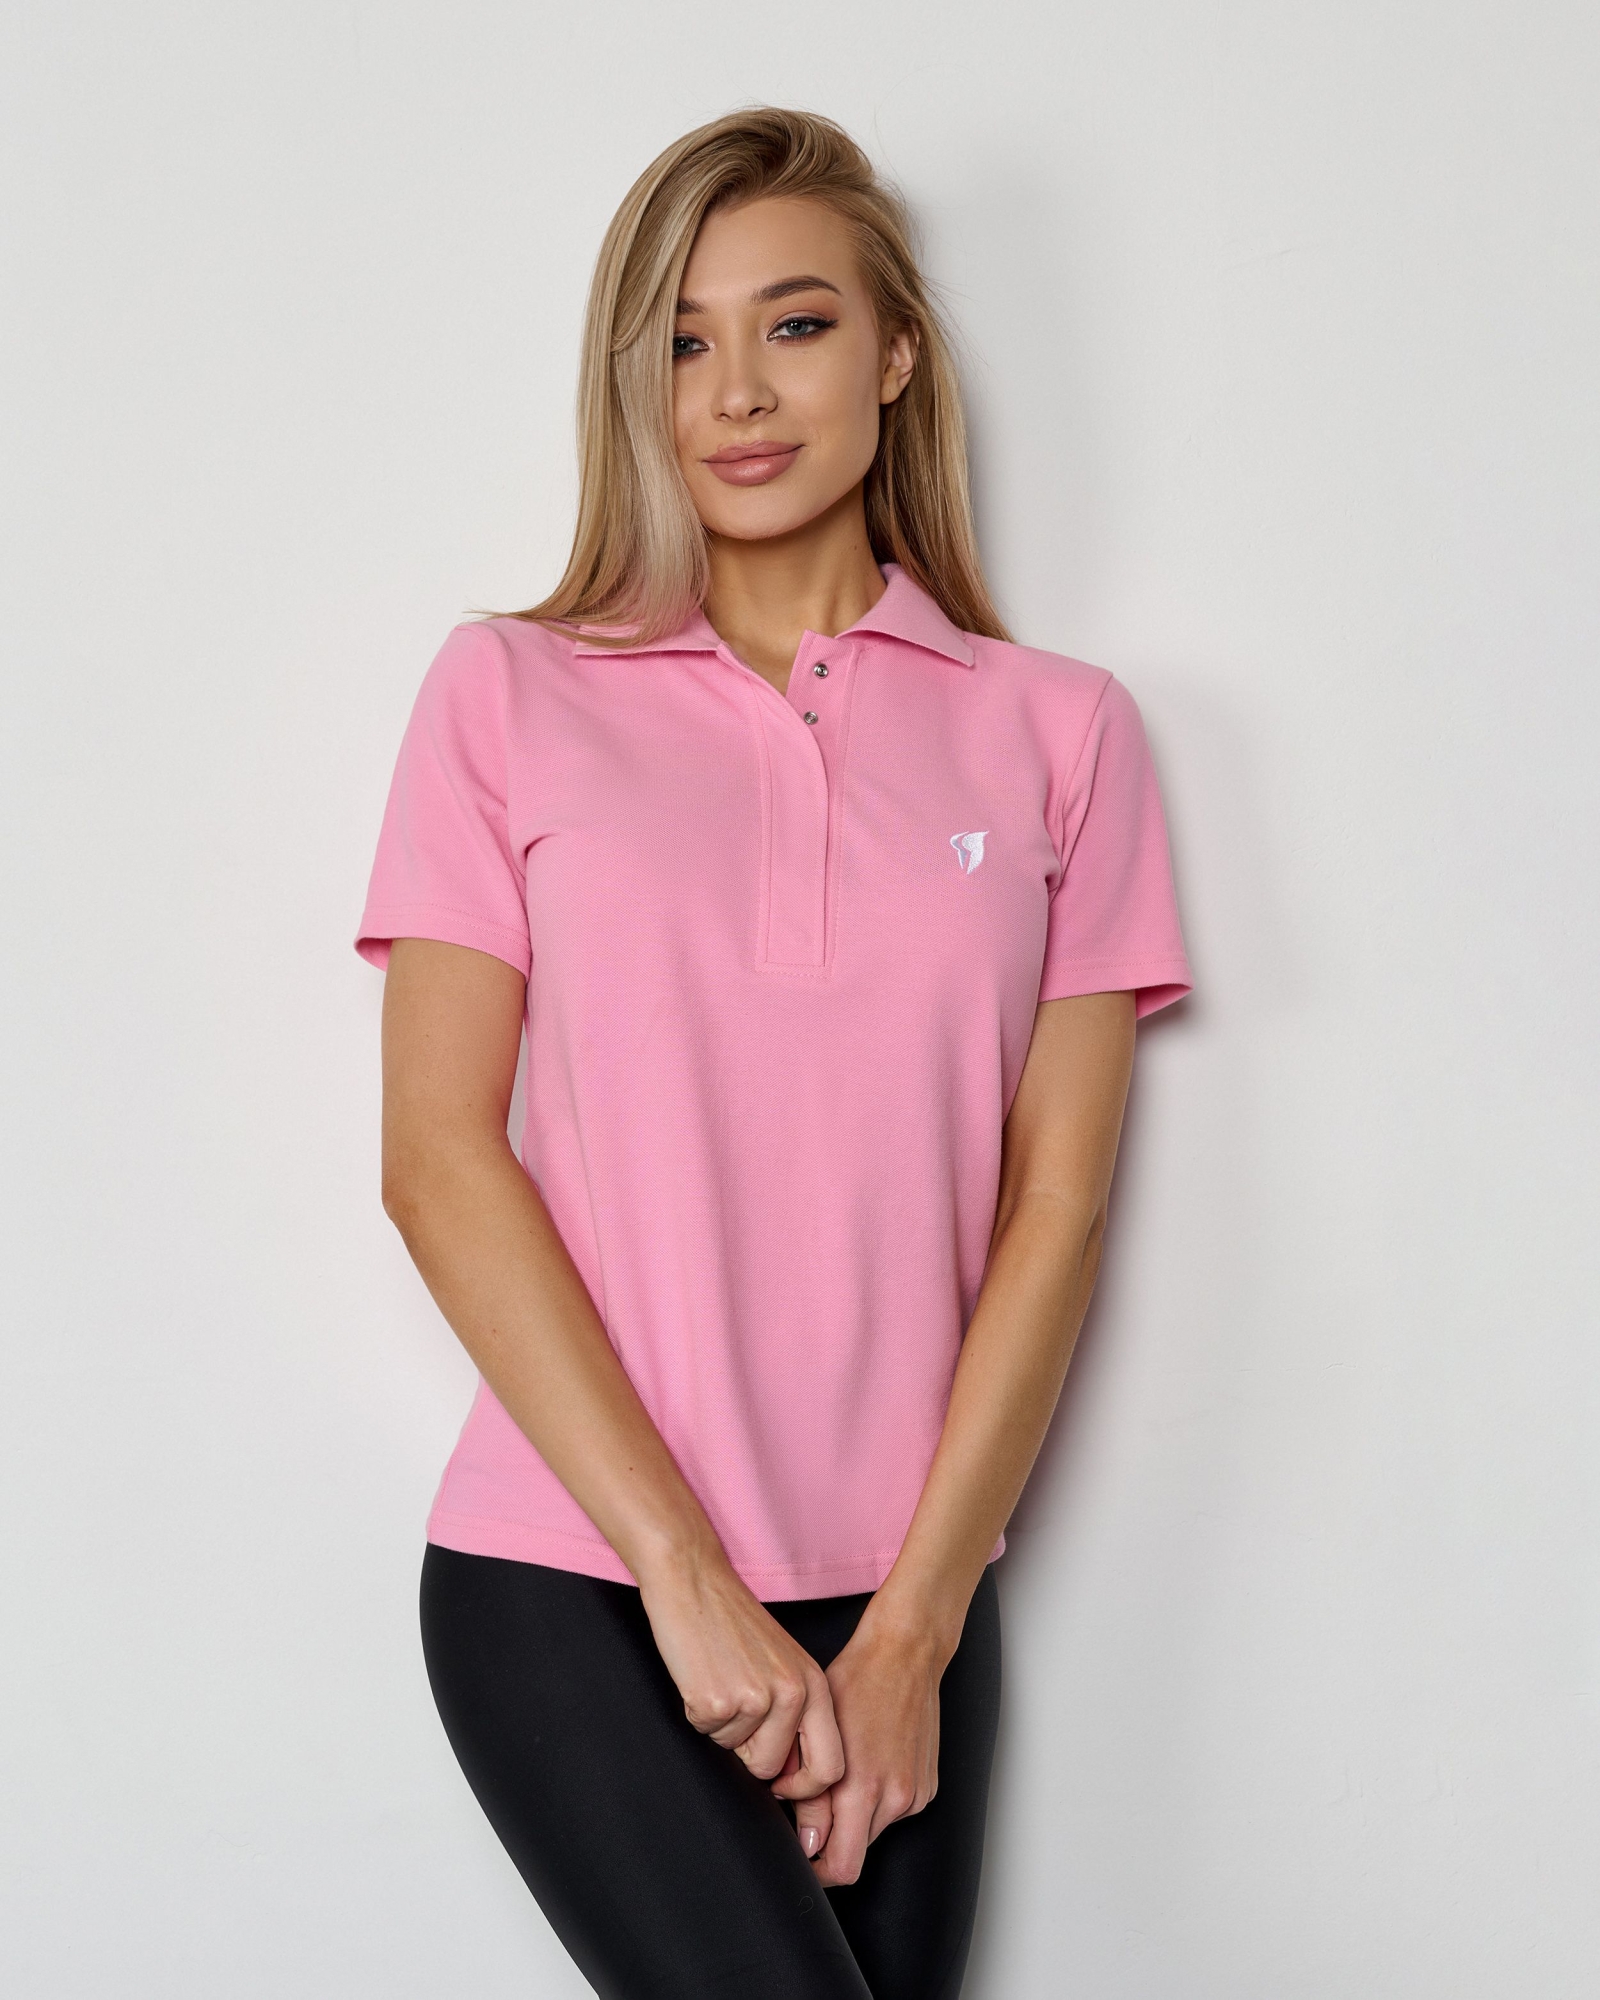 Bona Fide: T-Shirt Polo "Baby Pink" фото 10